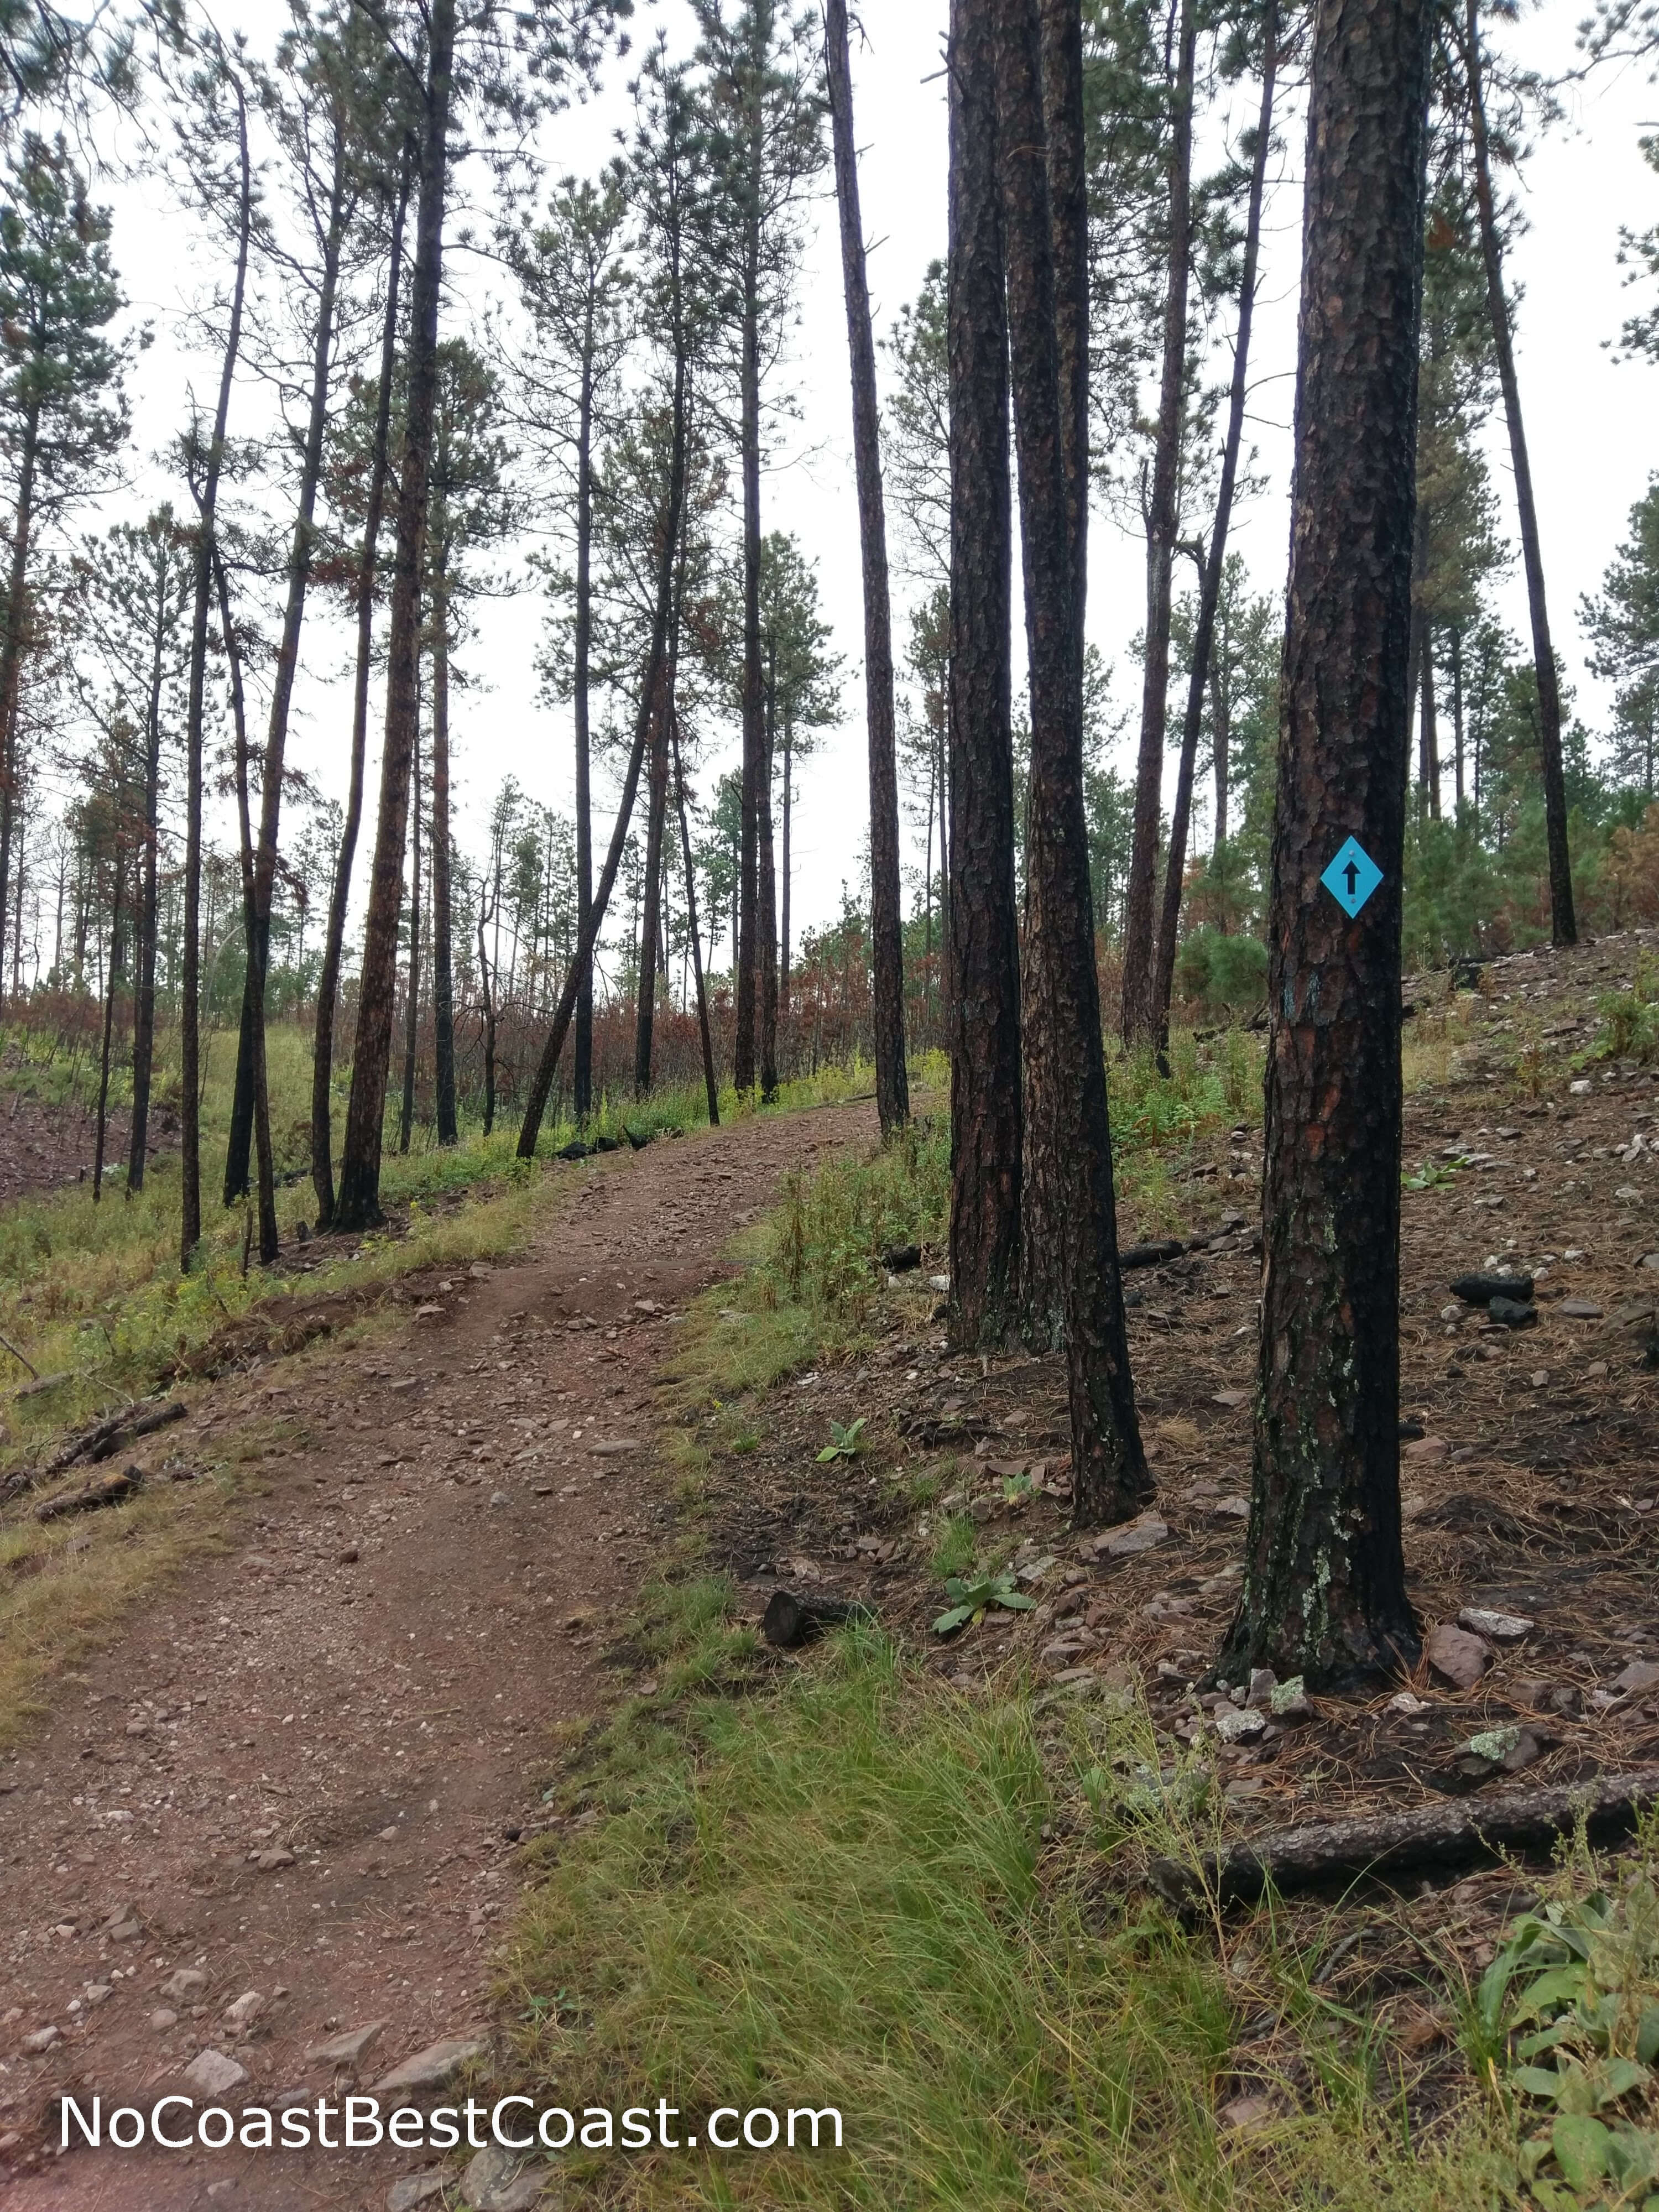 Blue blazes help you navigate the trail